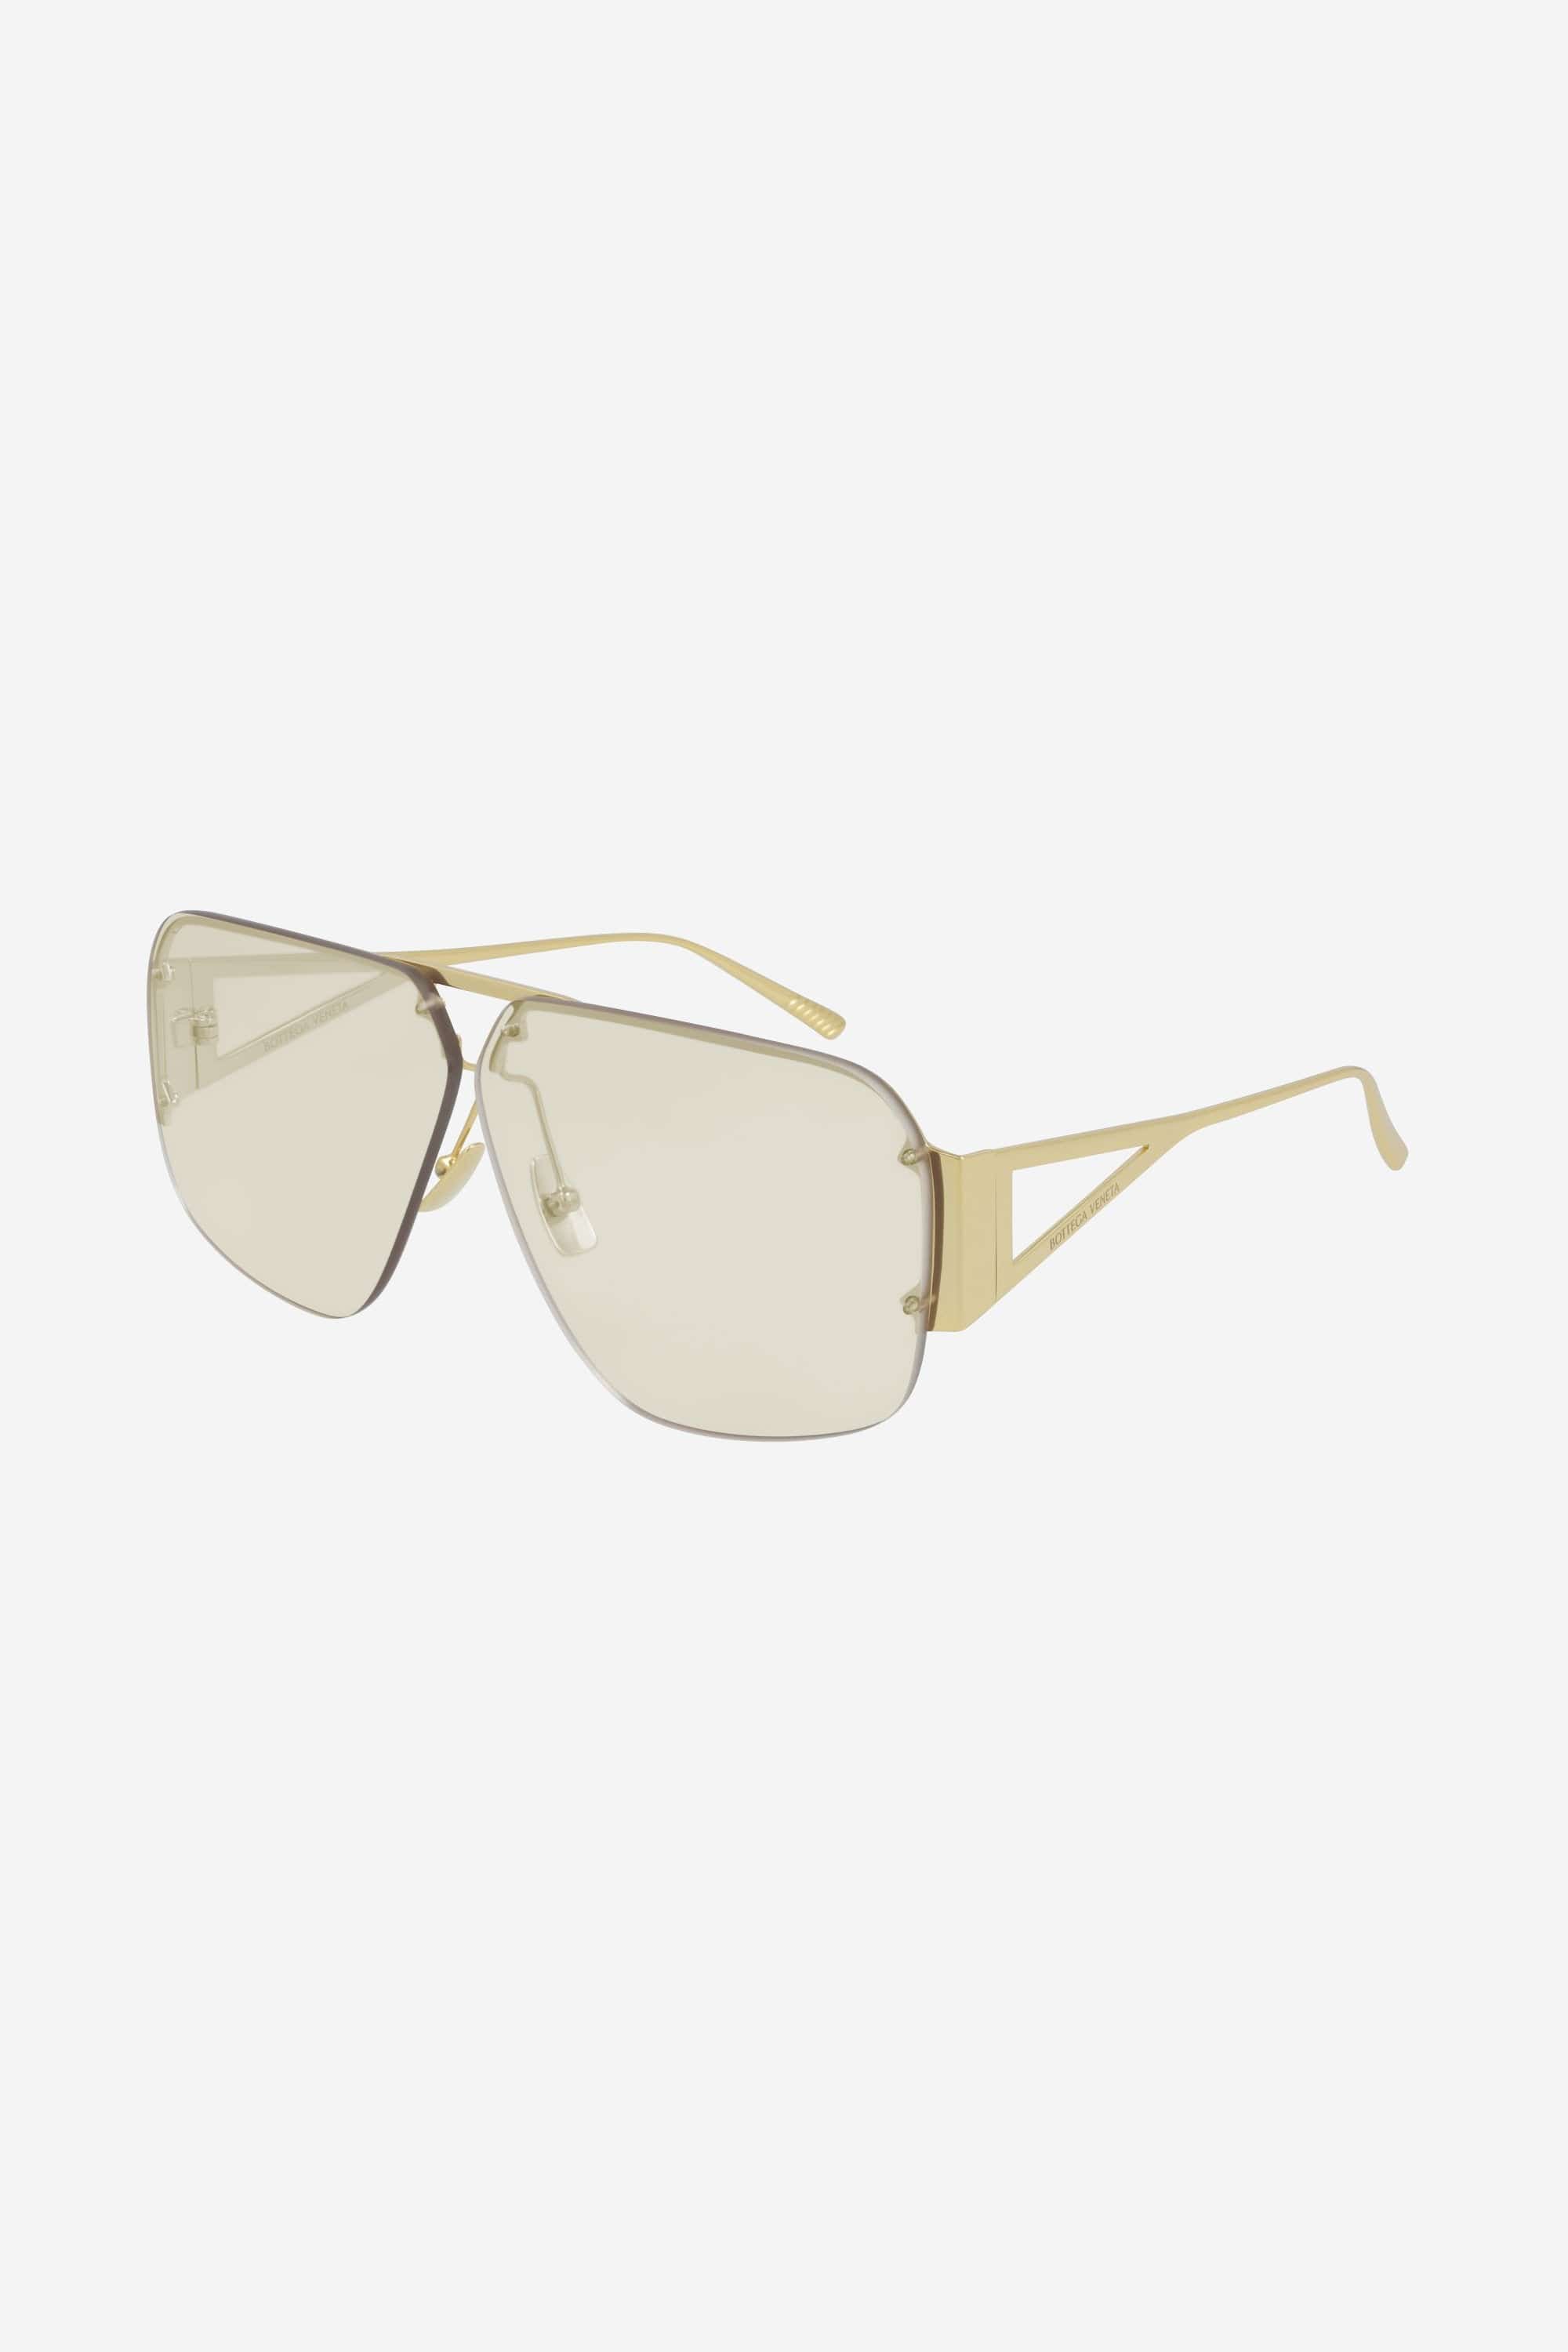 Bottega Veneta geometric caravan gold shades - Eyewear Club